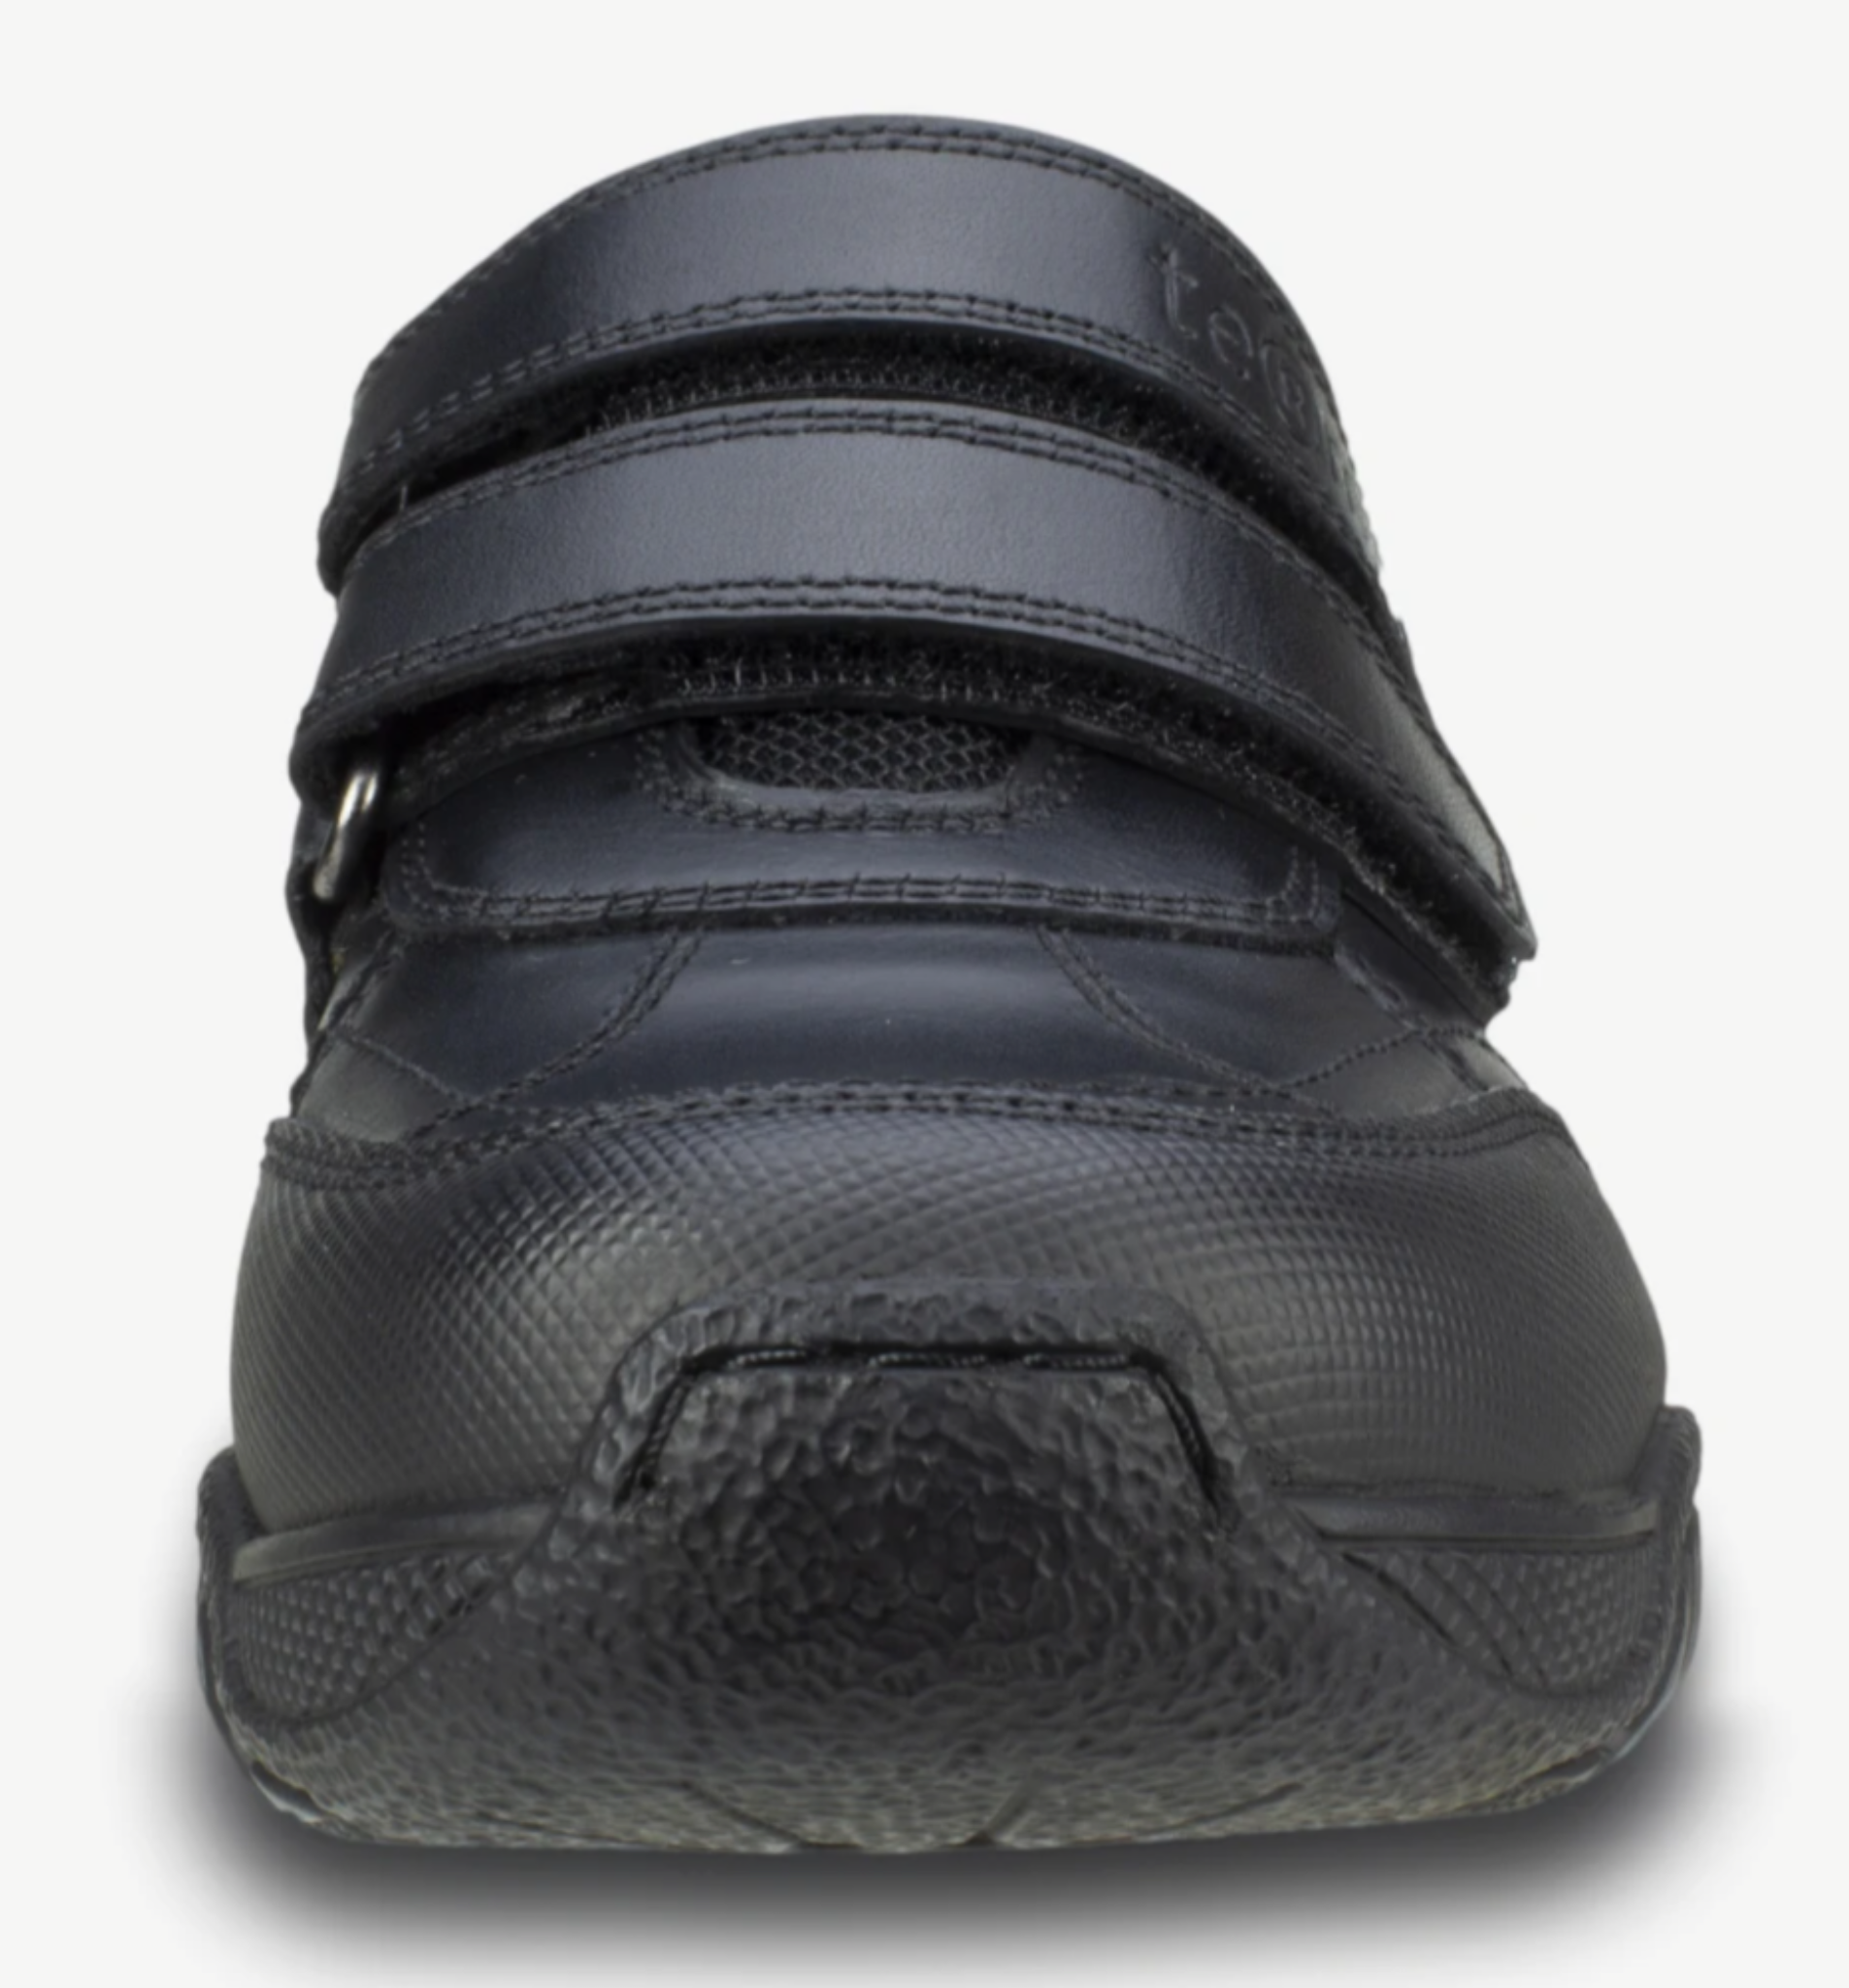 Term Chiver Leather Junior Black School Shoes